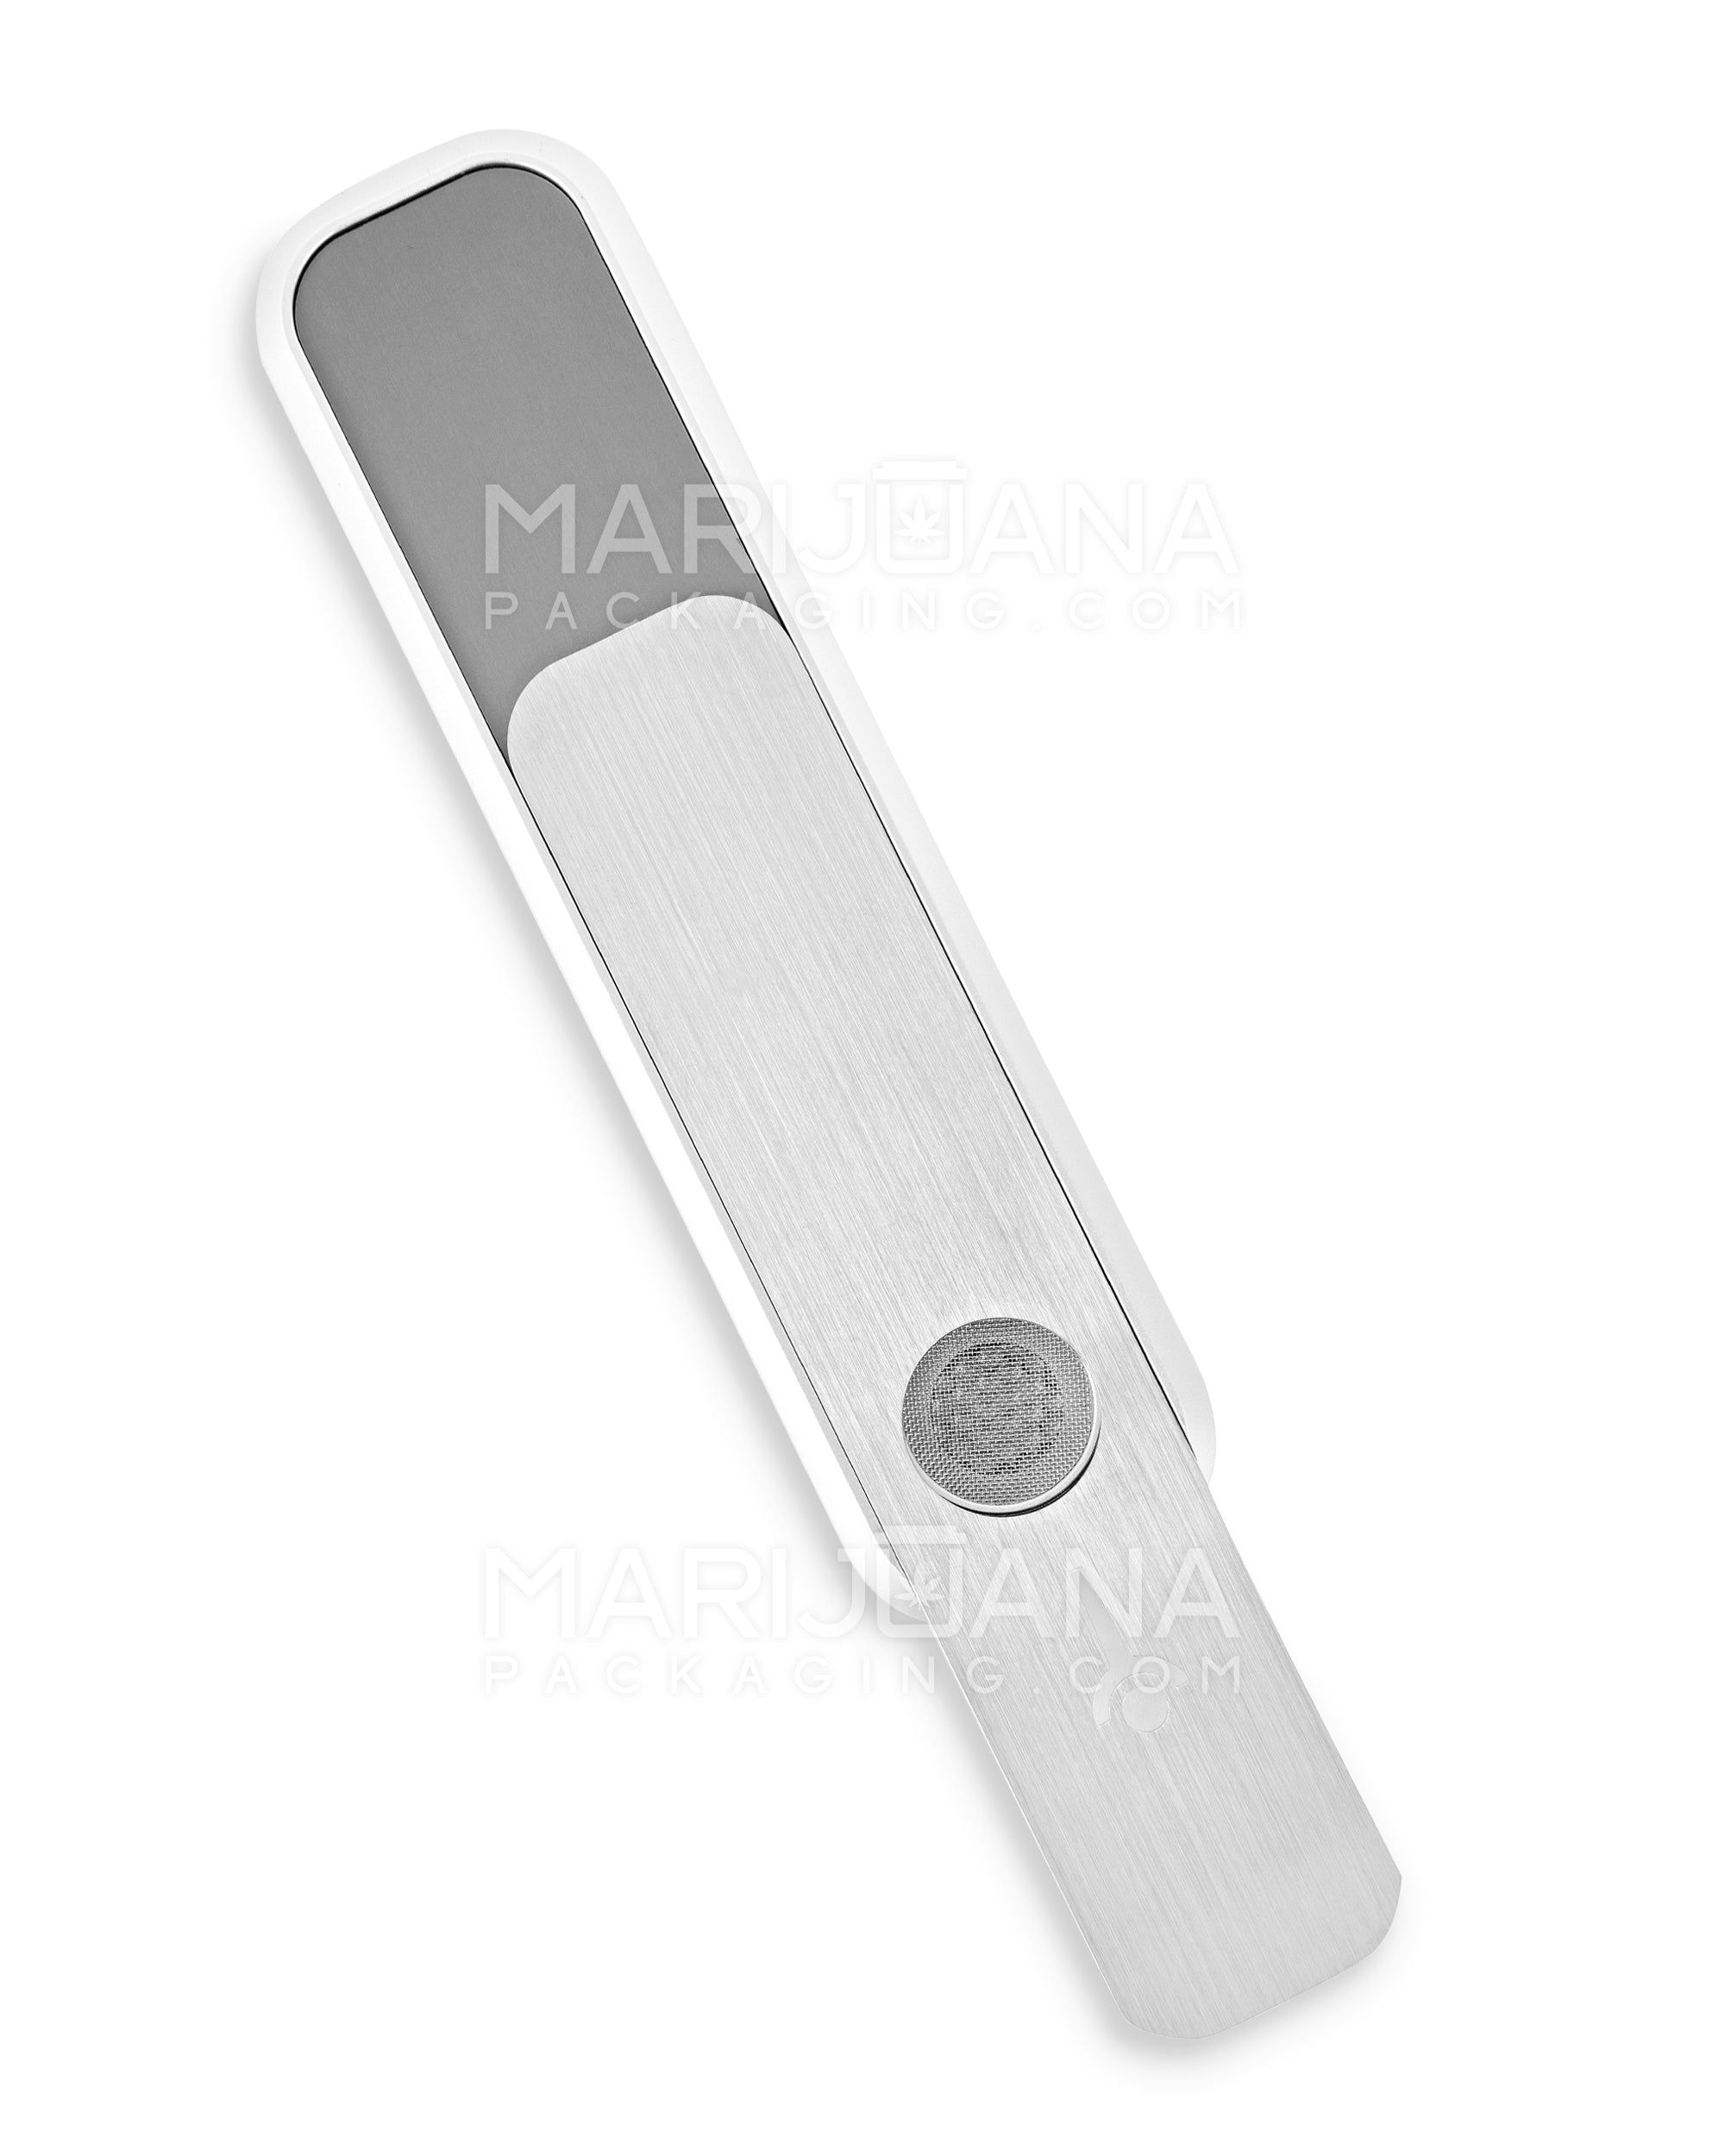 GENIUS PIPE | Classic Gadget Magnetic Slider Pipe w/ Silver Slider | 6in Long - Metal - Silver & Black - 4